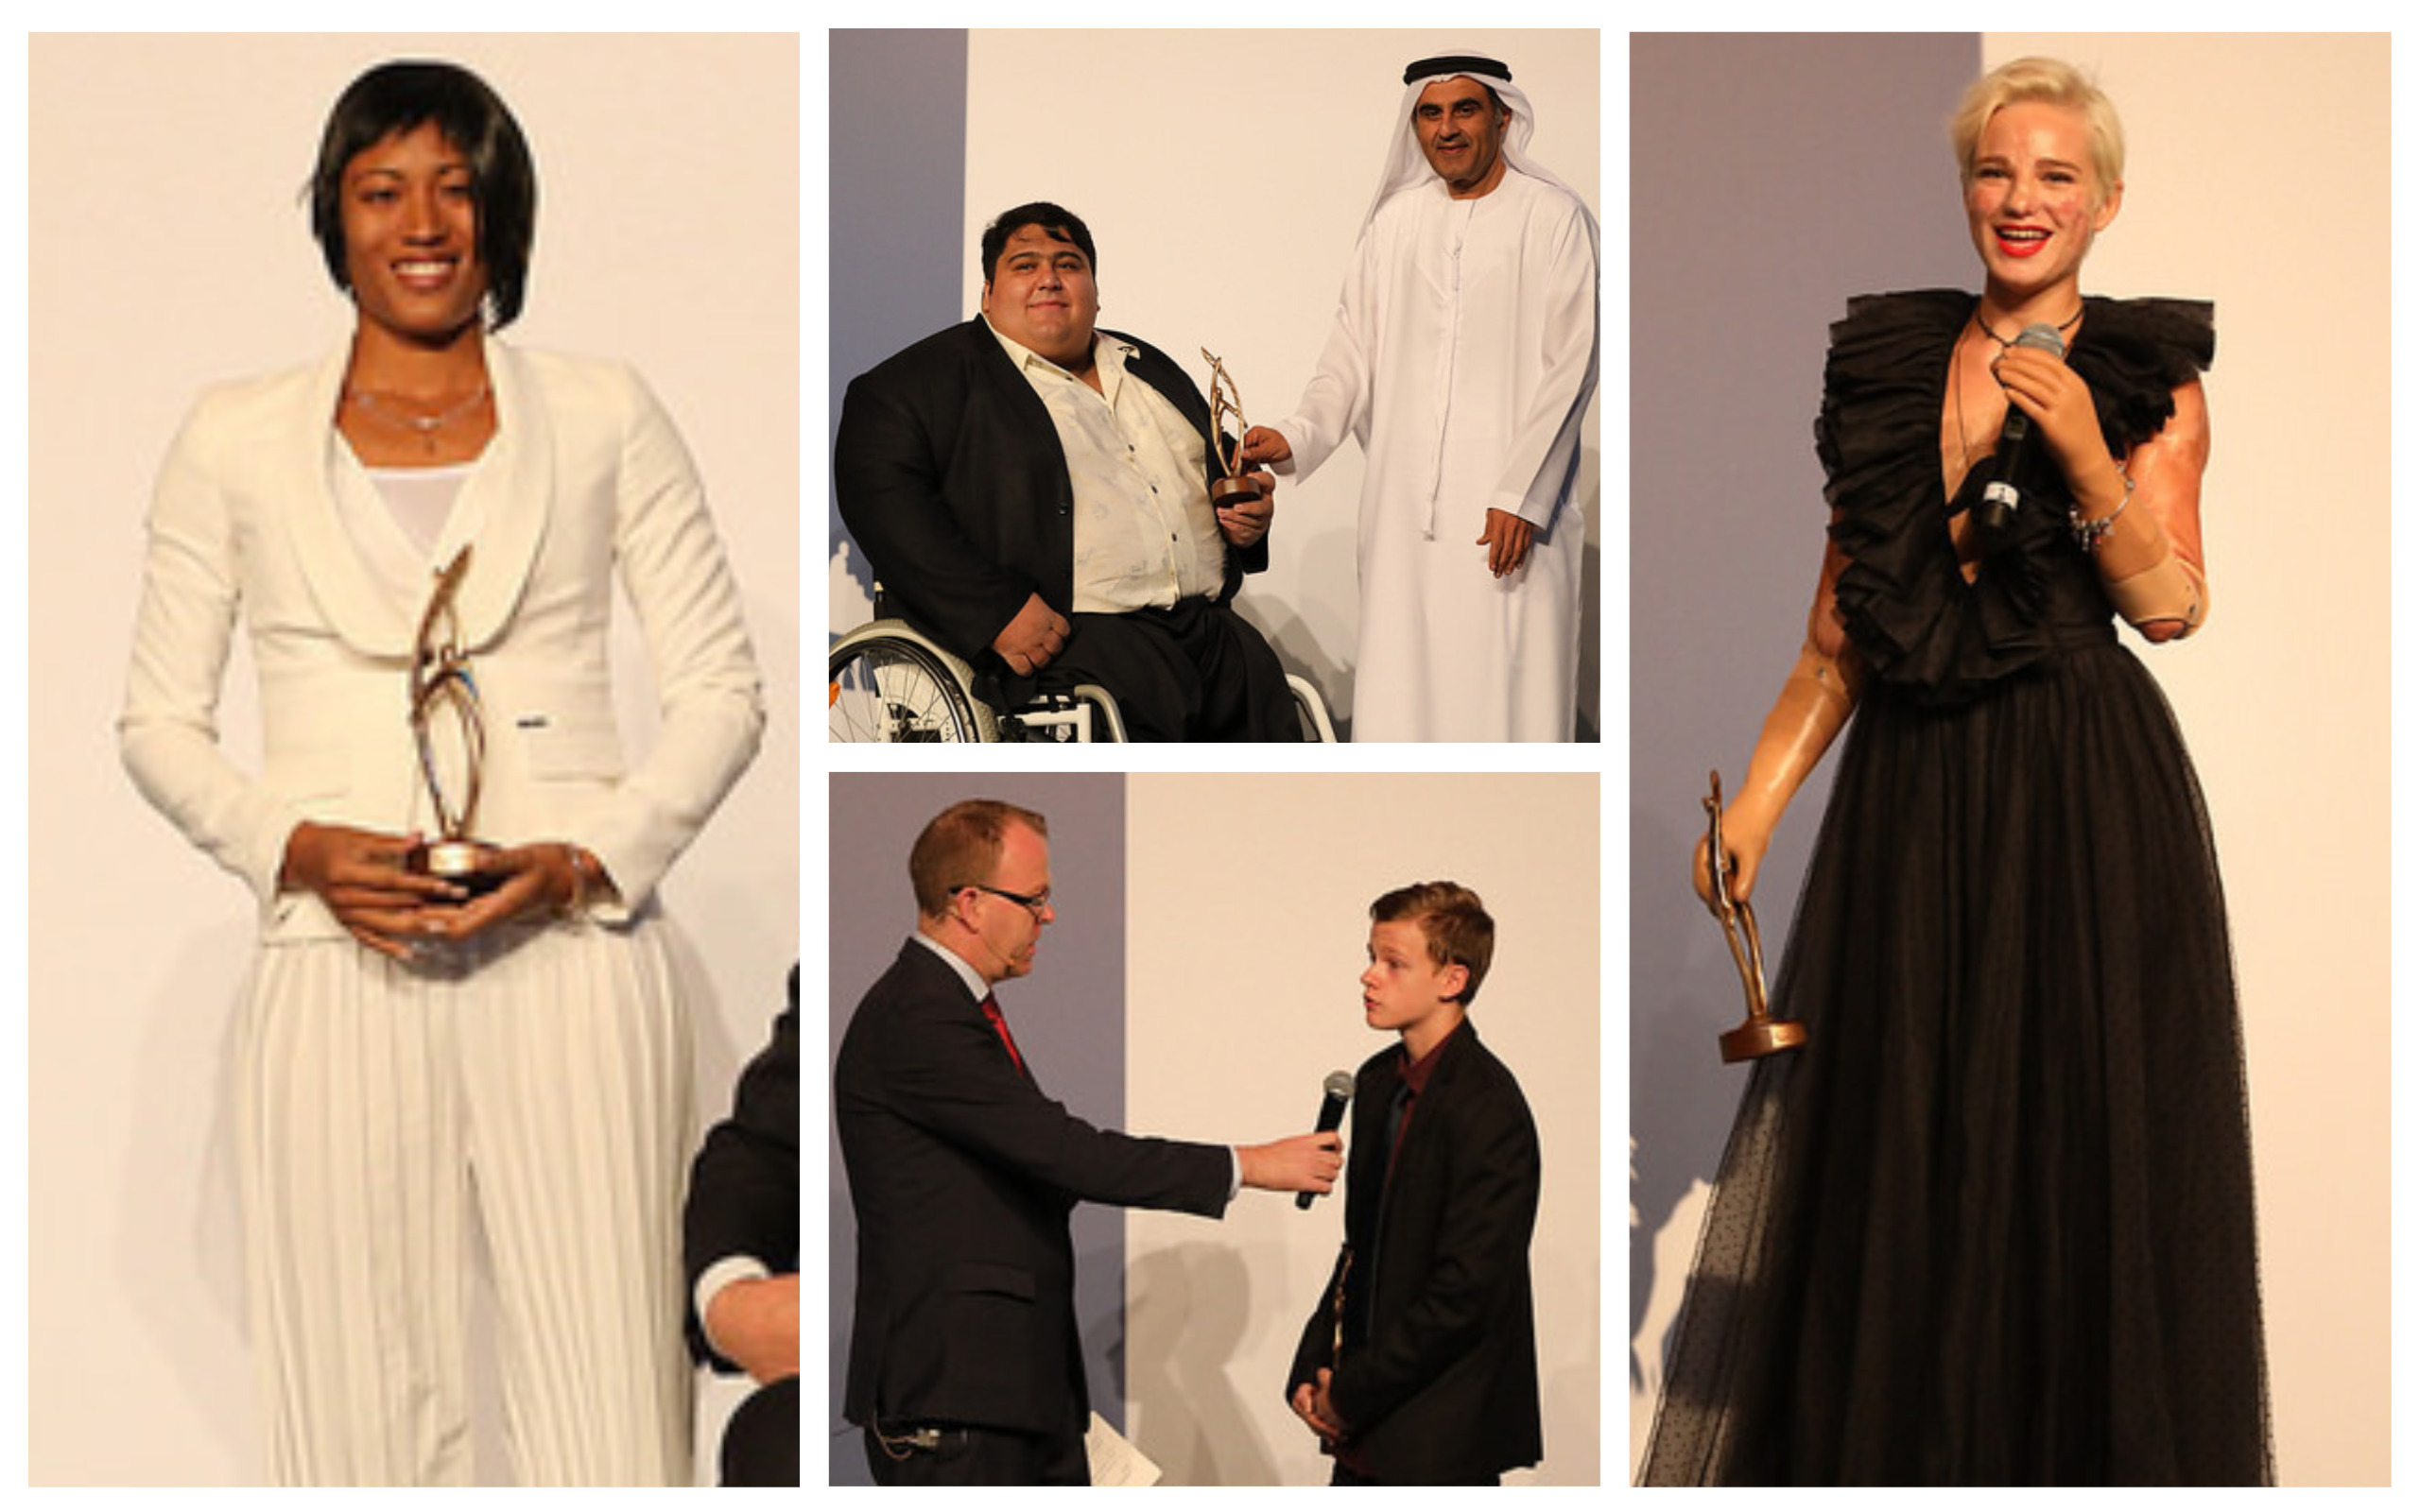 Para athletes receive their awards on stage